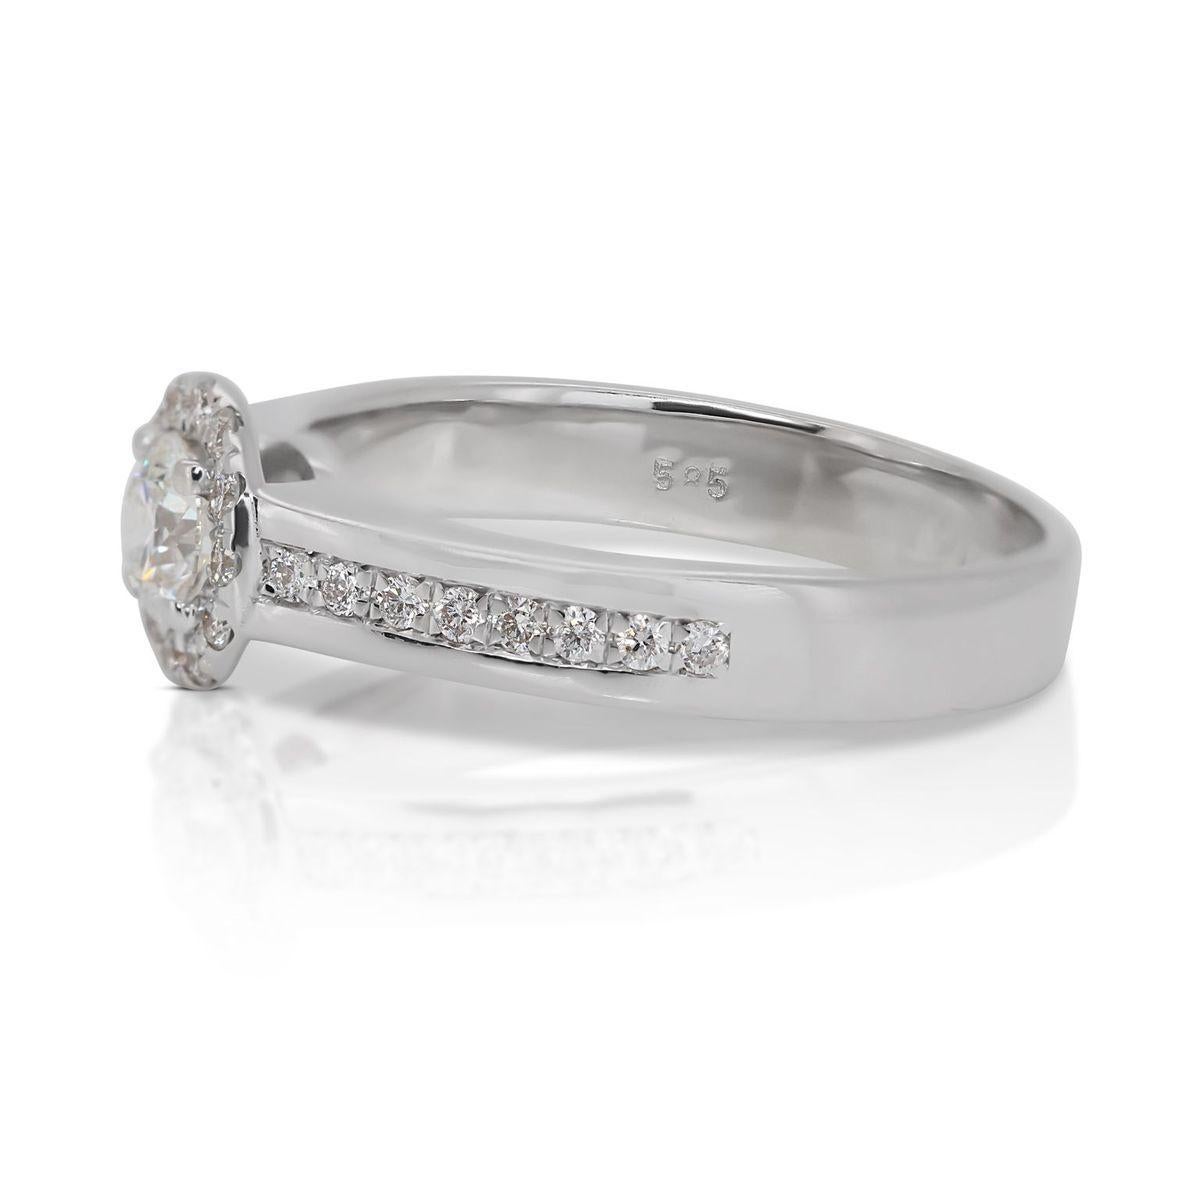 Women's Glamorous 14k White Gold Diamond Ring with .53ct Natural Diamond For Sale